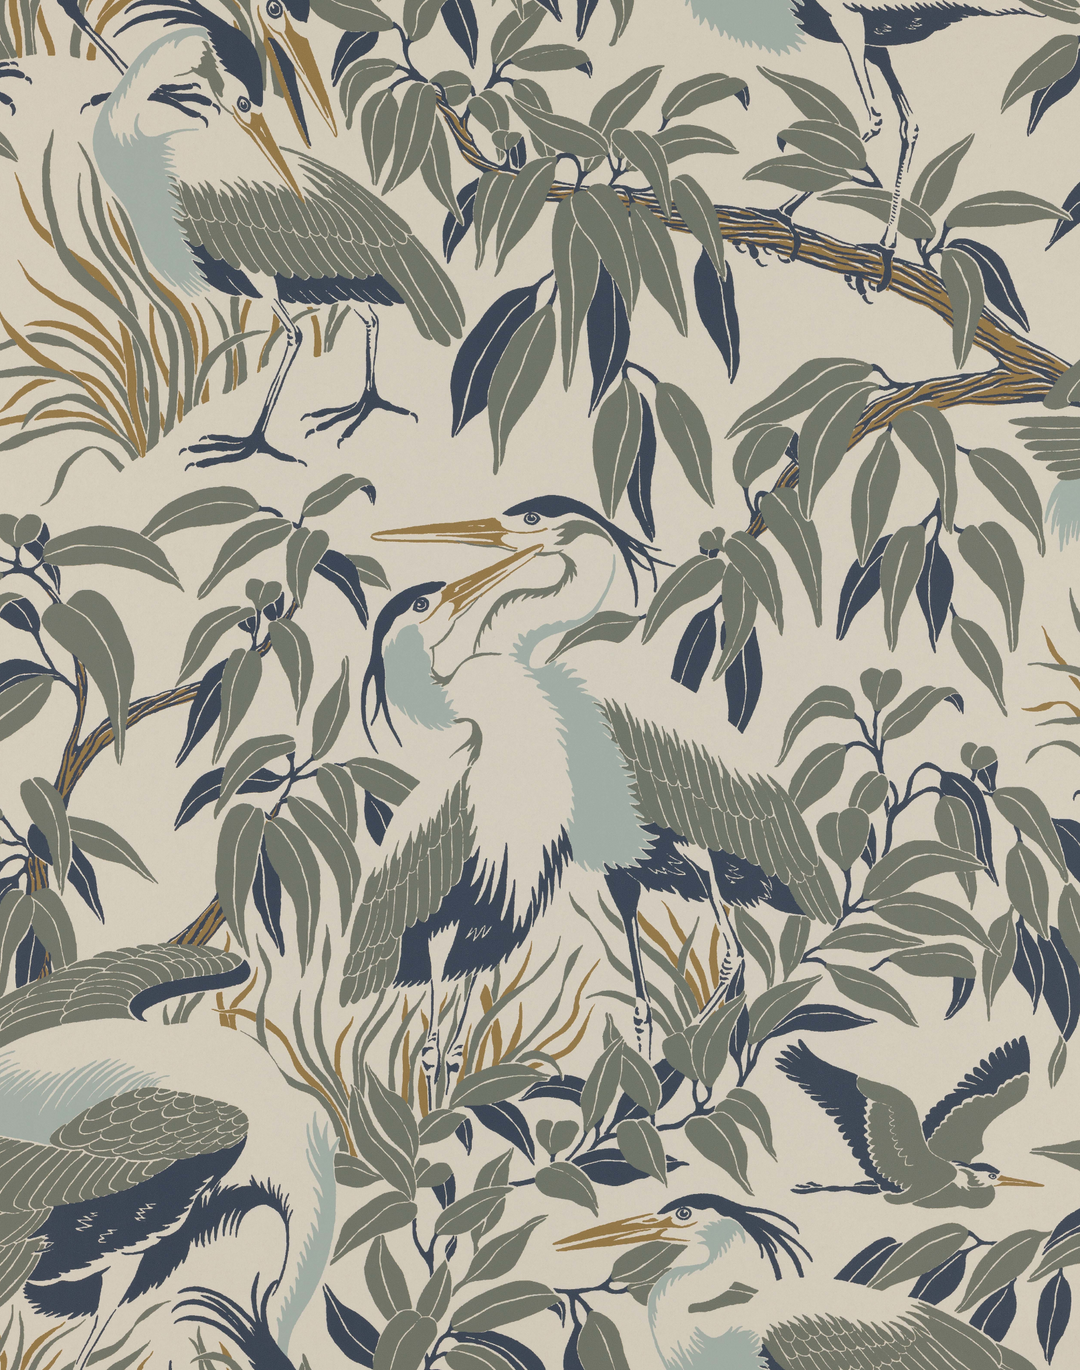 Herons, Camouflage